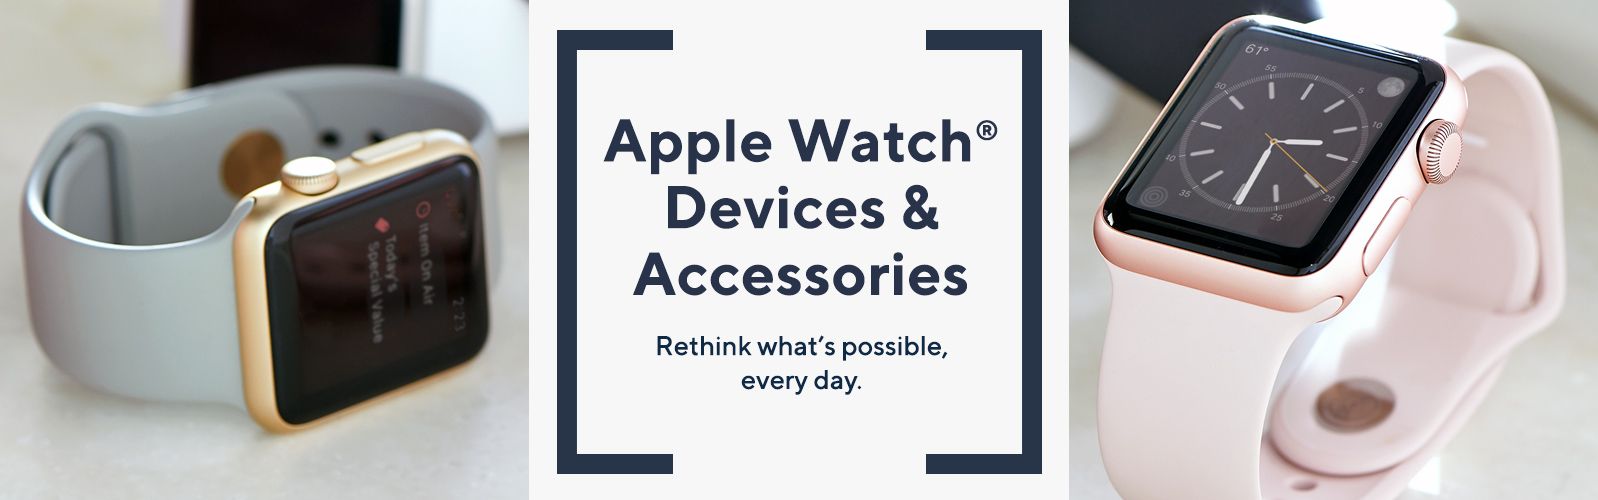 Negen accumuleren Quagga Apple Watches - QVC.com